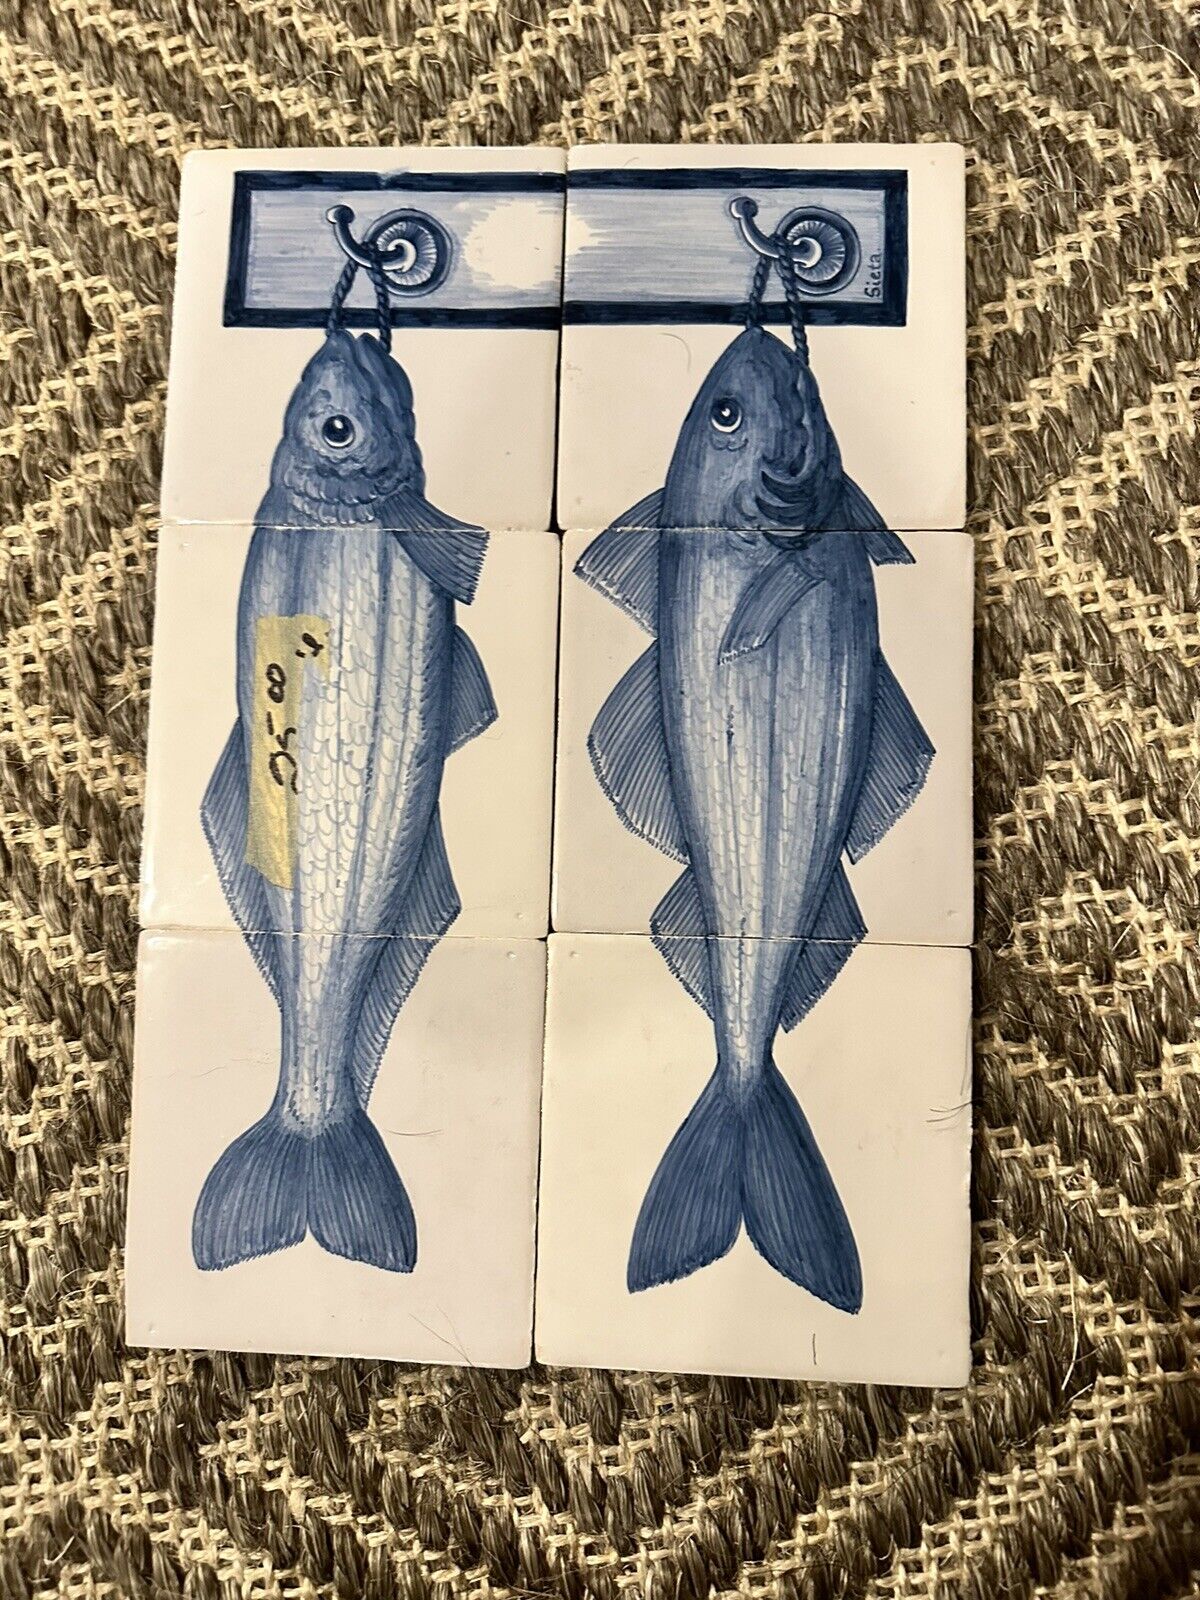 Vintage delft Style Tile Panel Mural Blue Fish Hanging On Hook 5x5” Tiles